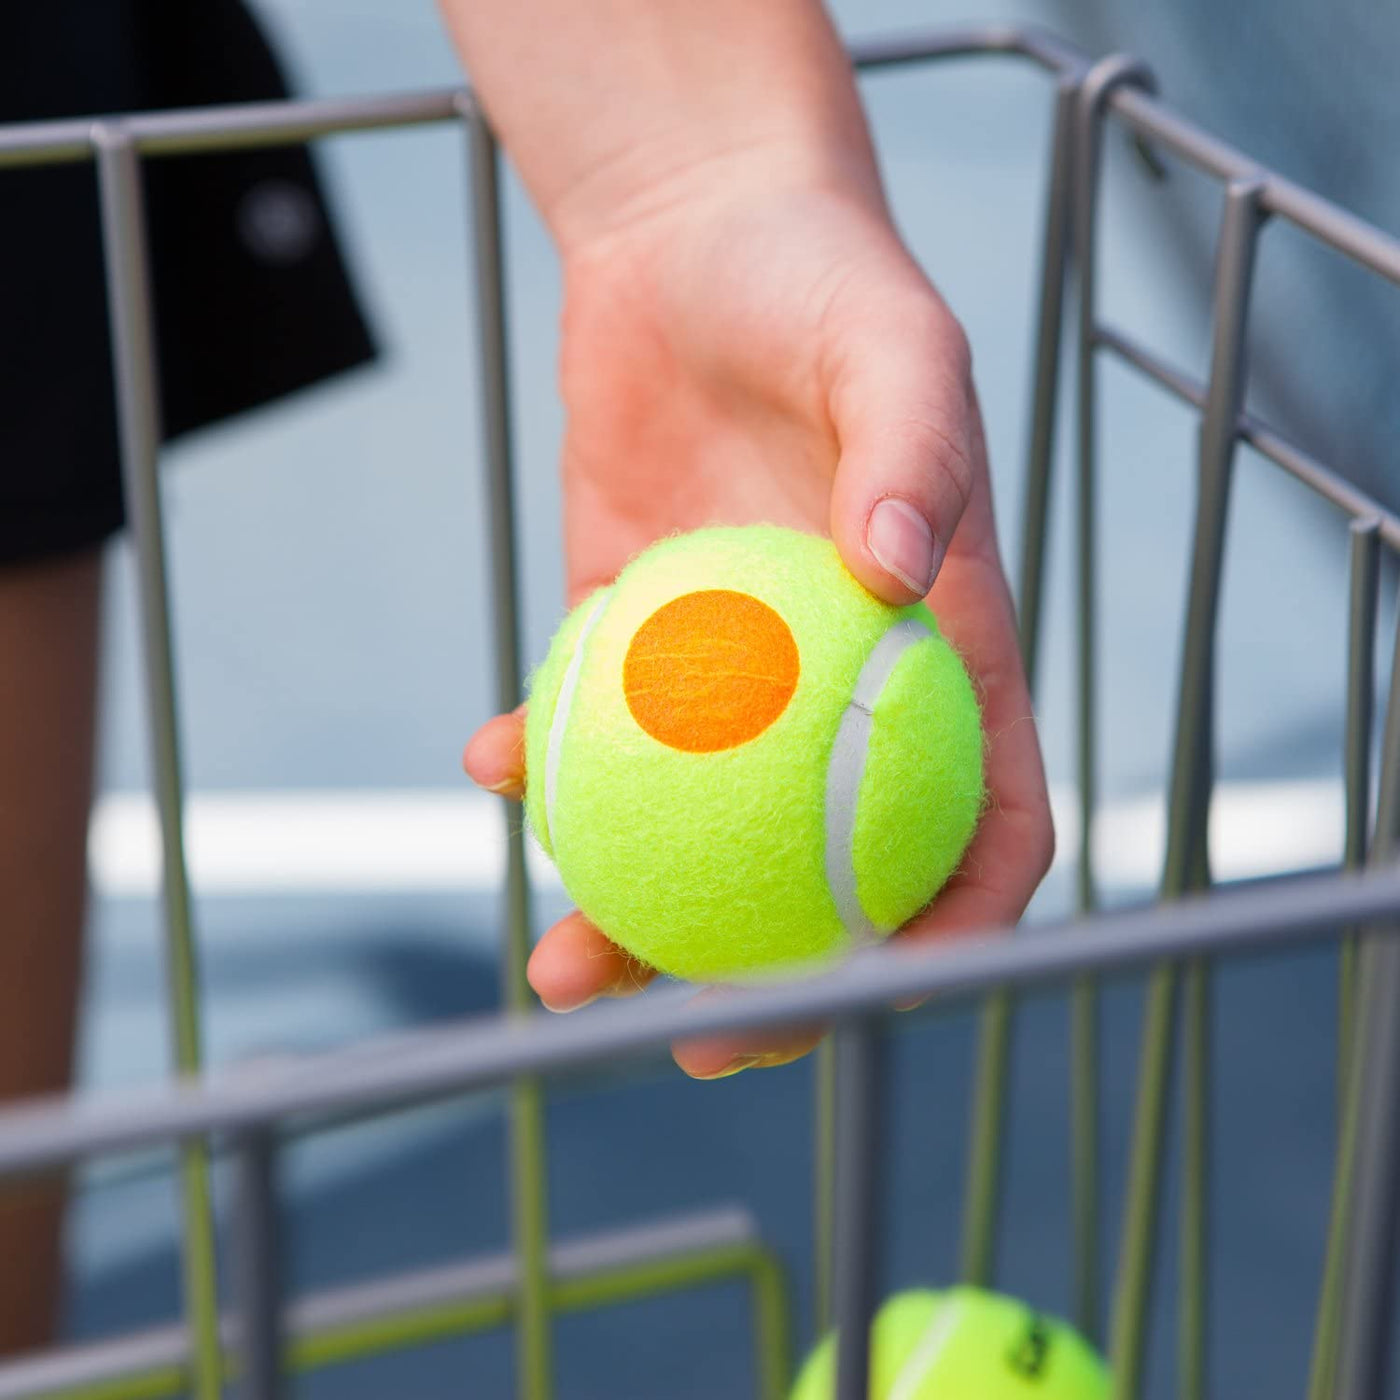 Gamma Beginner Child or Adult Training (Transition) Practice Tennis Balls: Orange 60 or Green 78 Dot (25%-50% Slower Ball Speed) - 12, 36, 48, 60 Pack Sizes